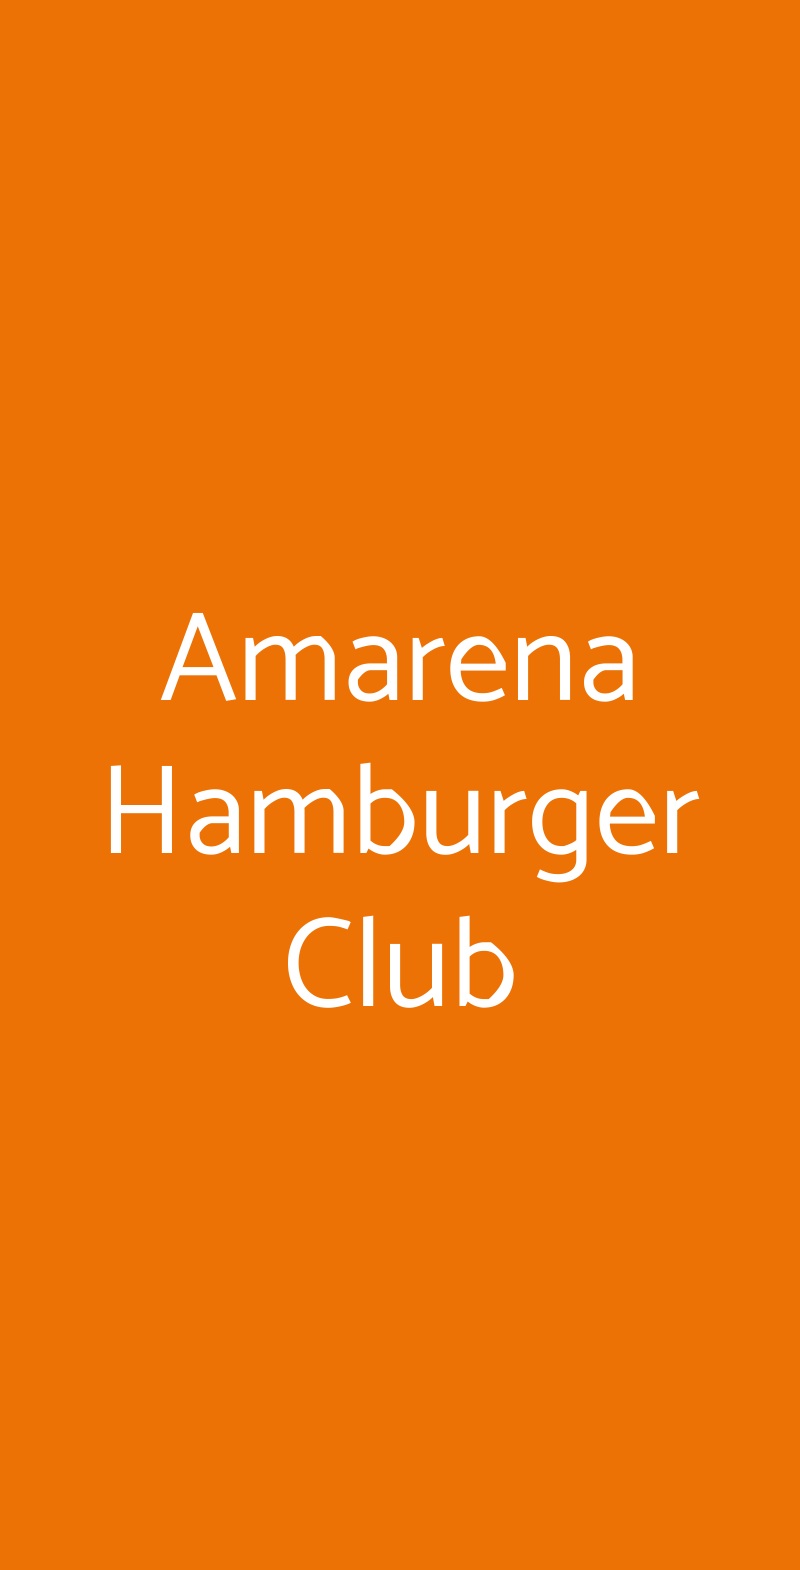 Amarena Hamburger Club Rapallo menù 1 pagina